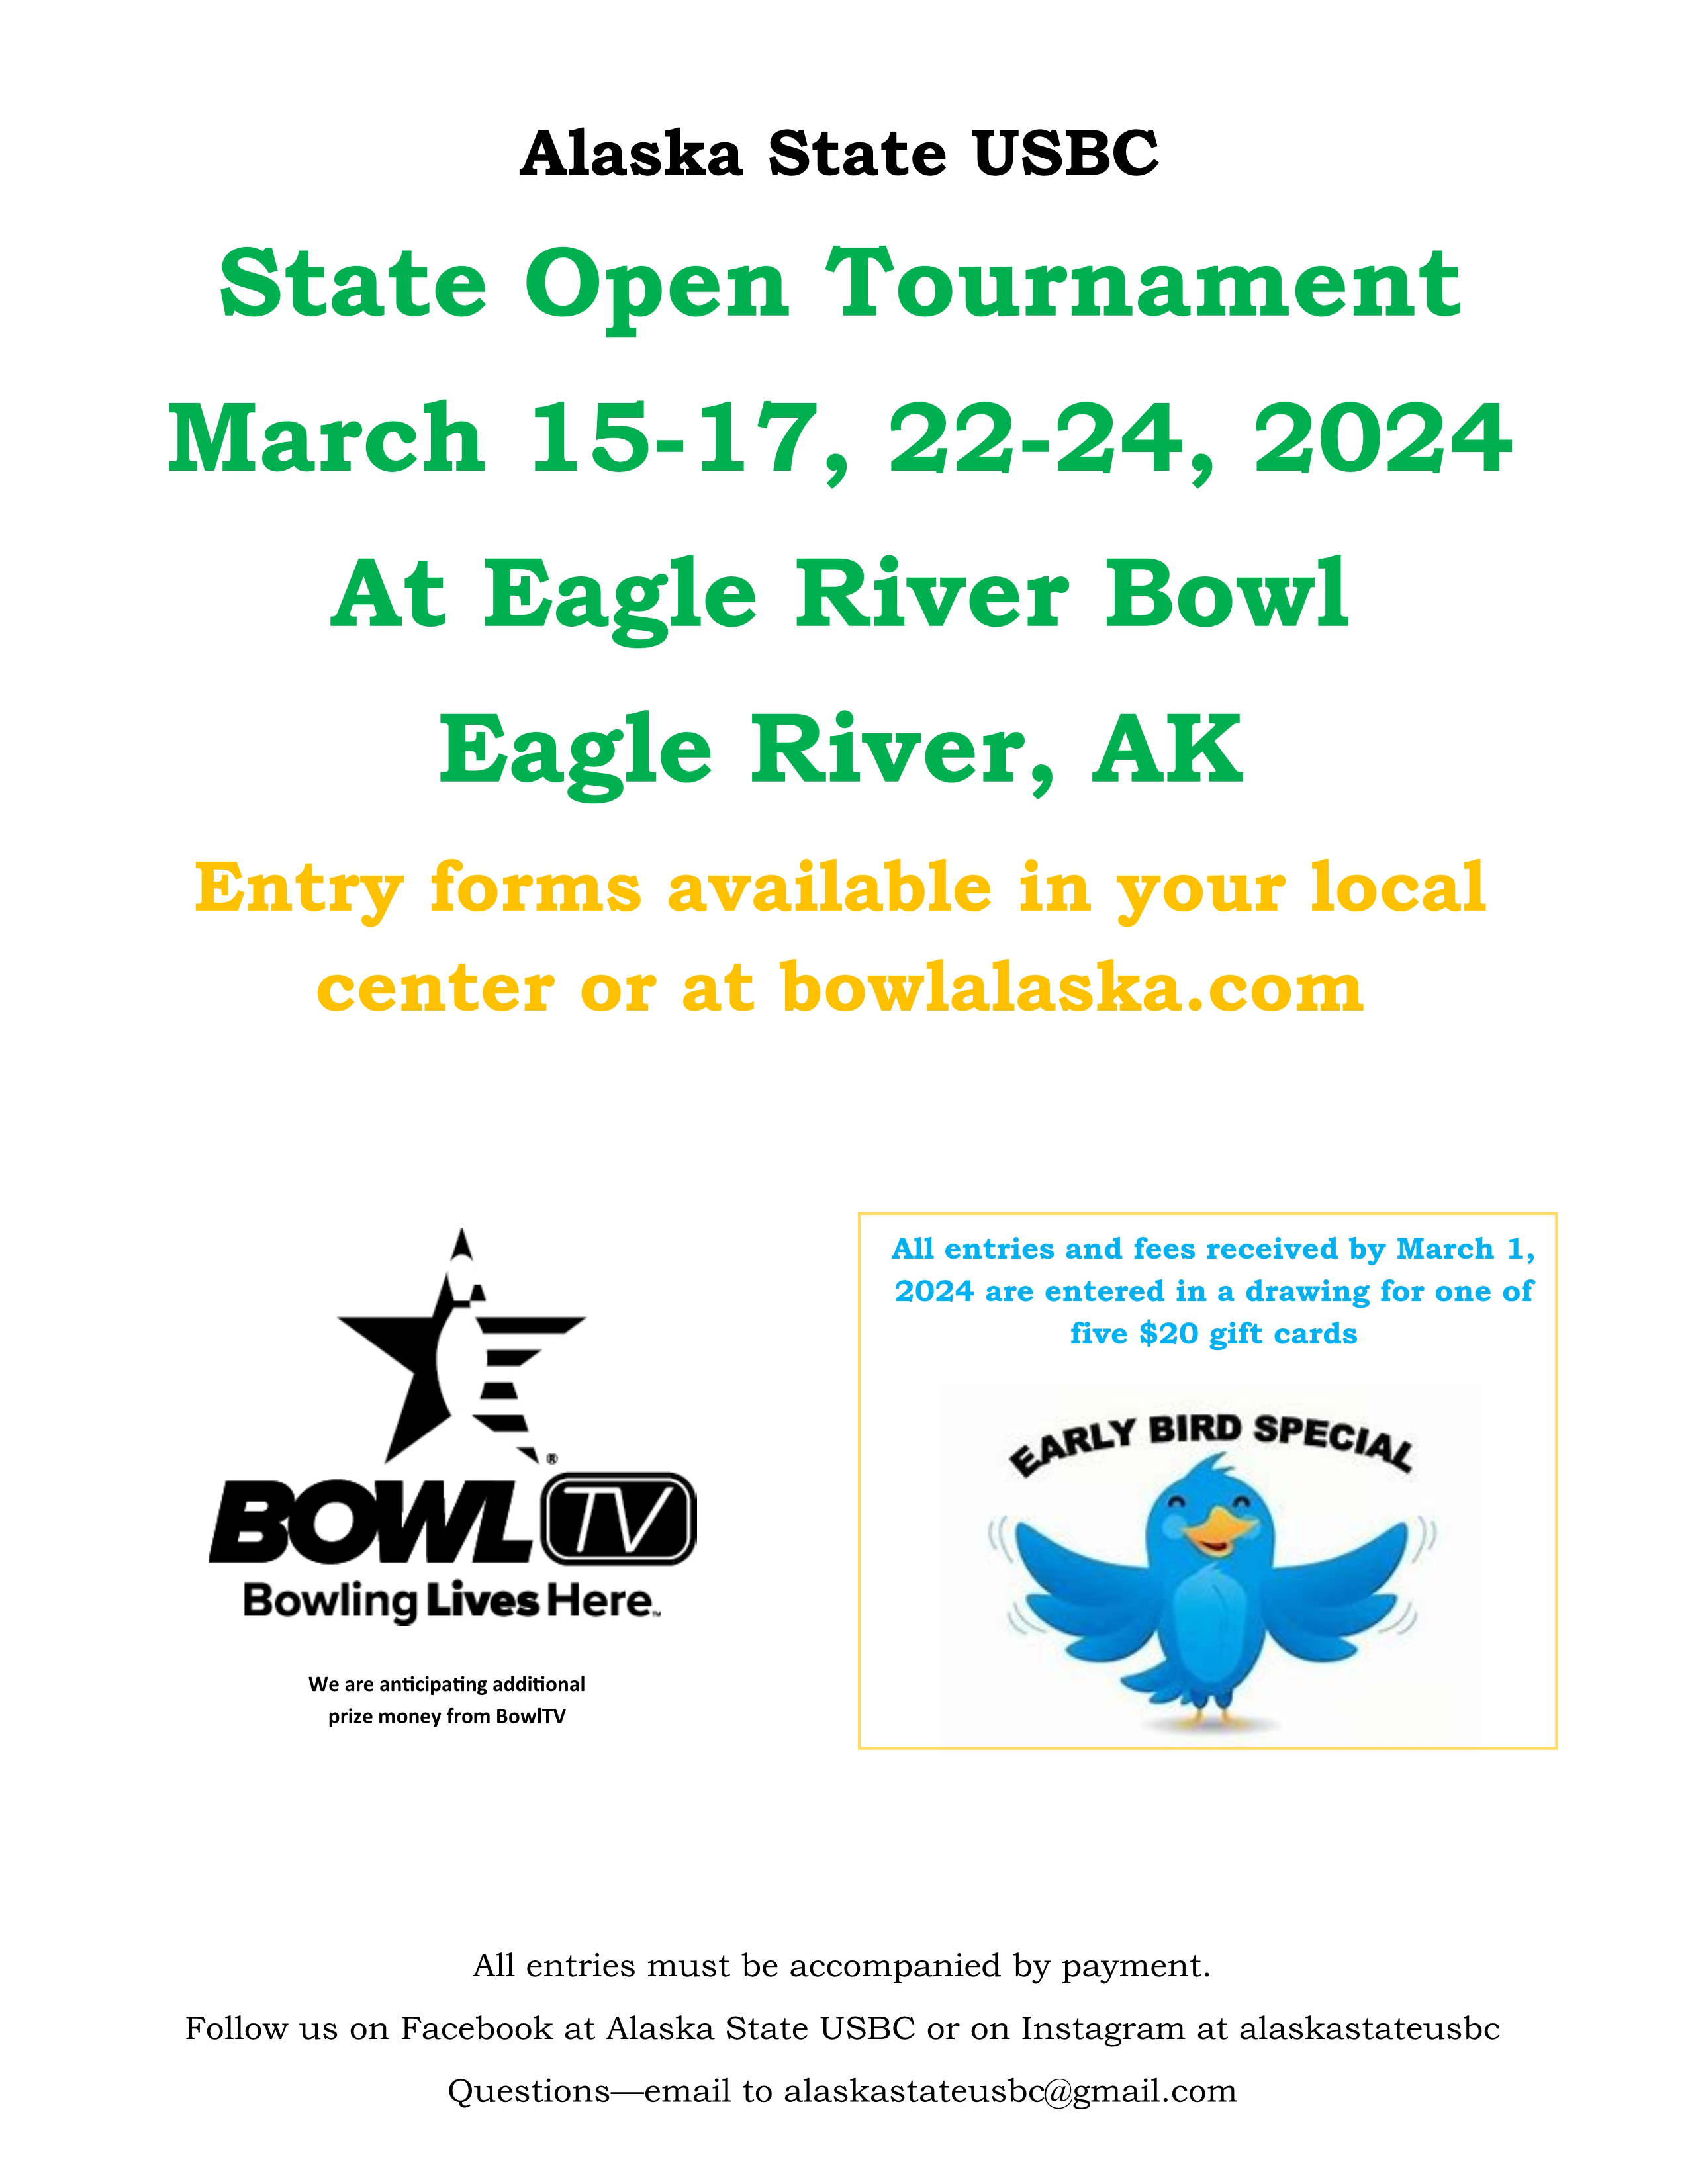 Alaska State USBC 2024 Open Tournament